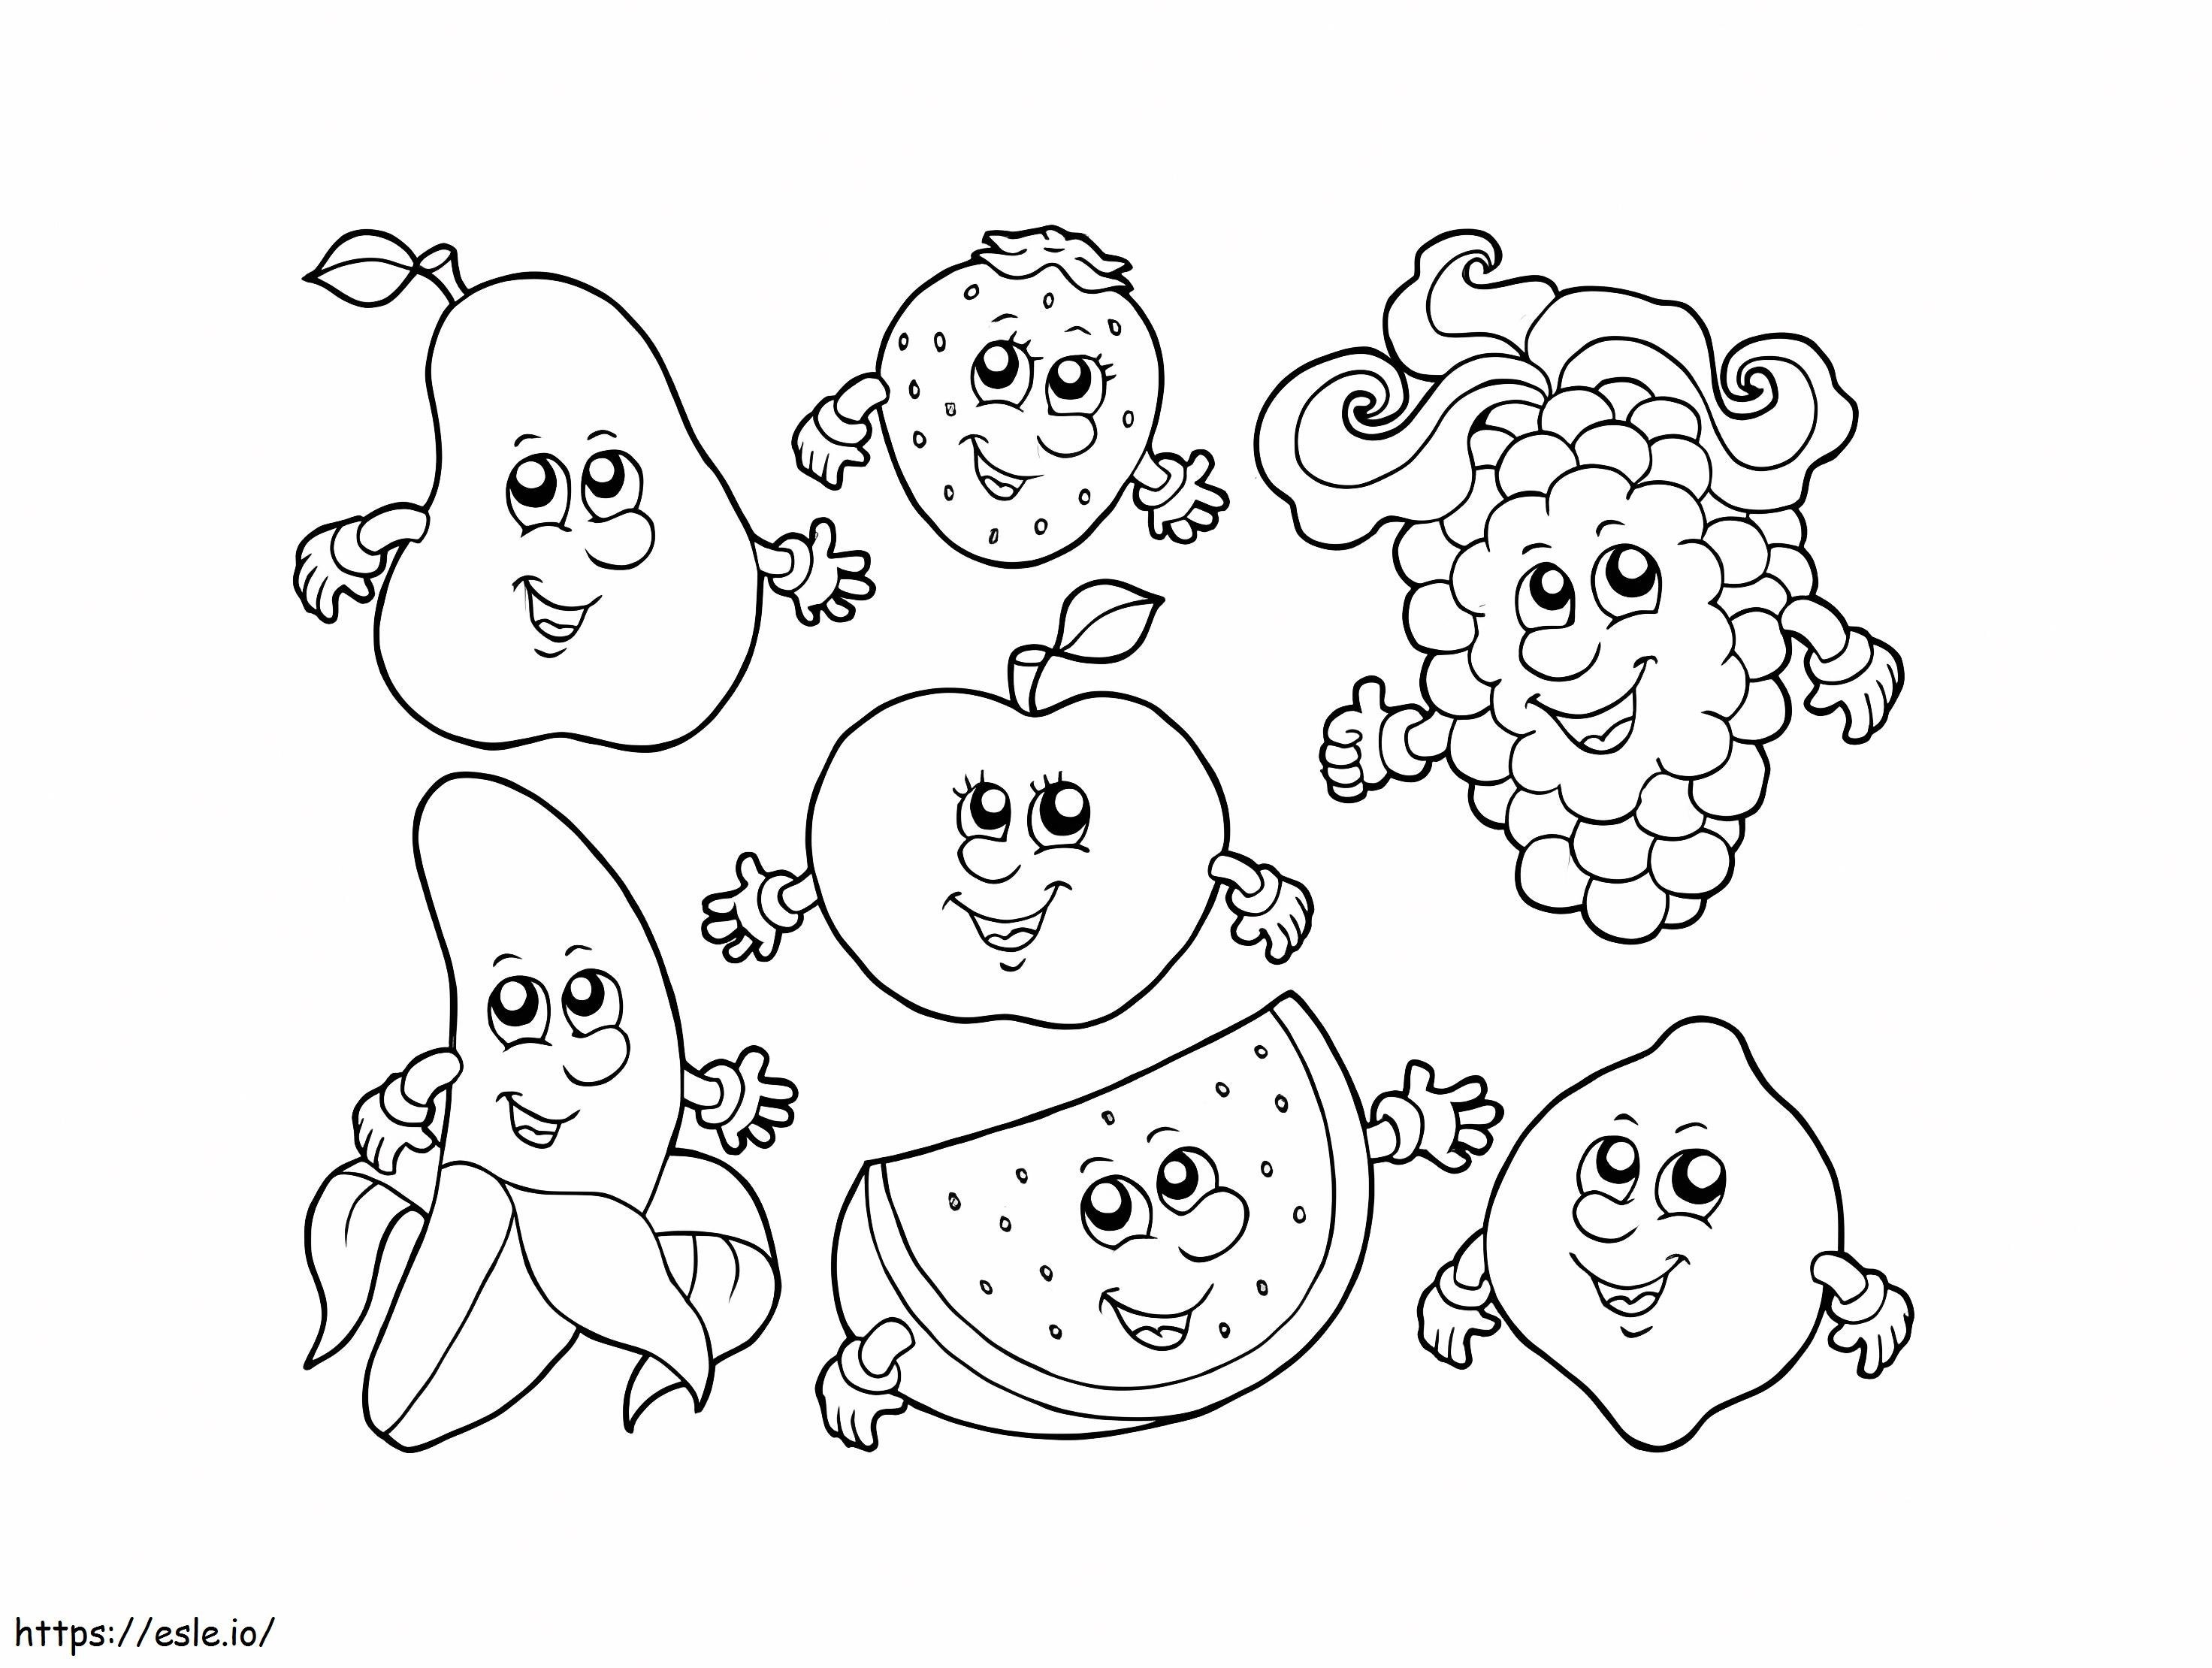 Cartoon Fruits coloring page